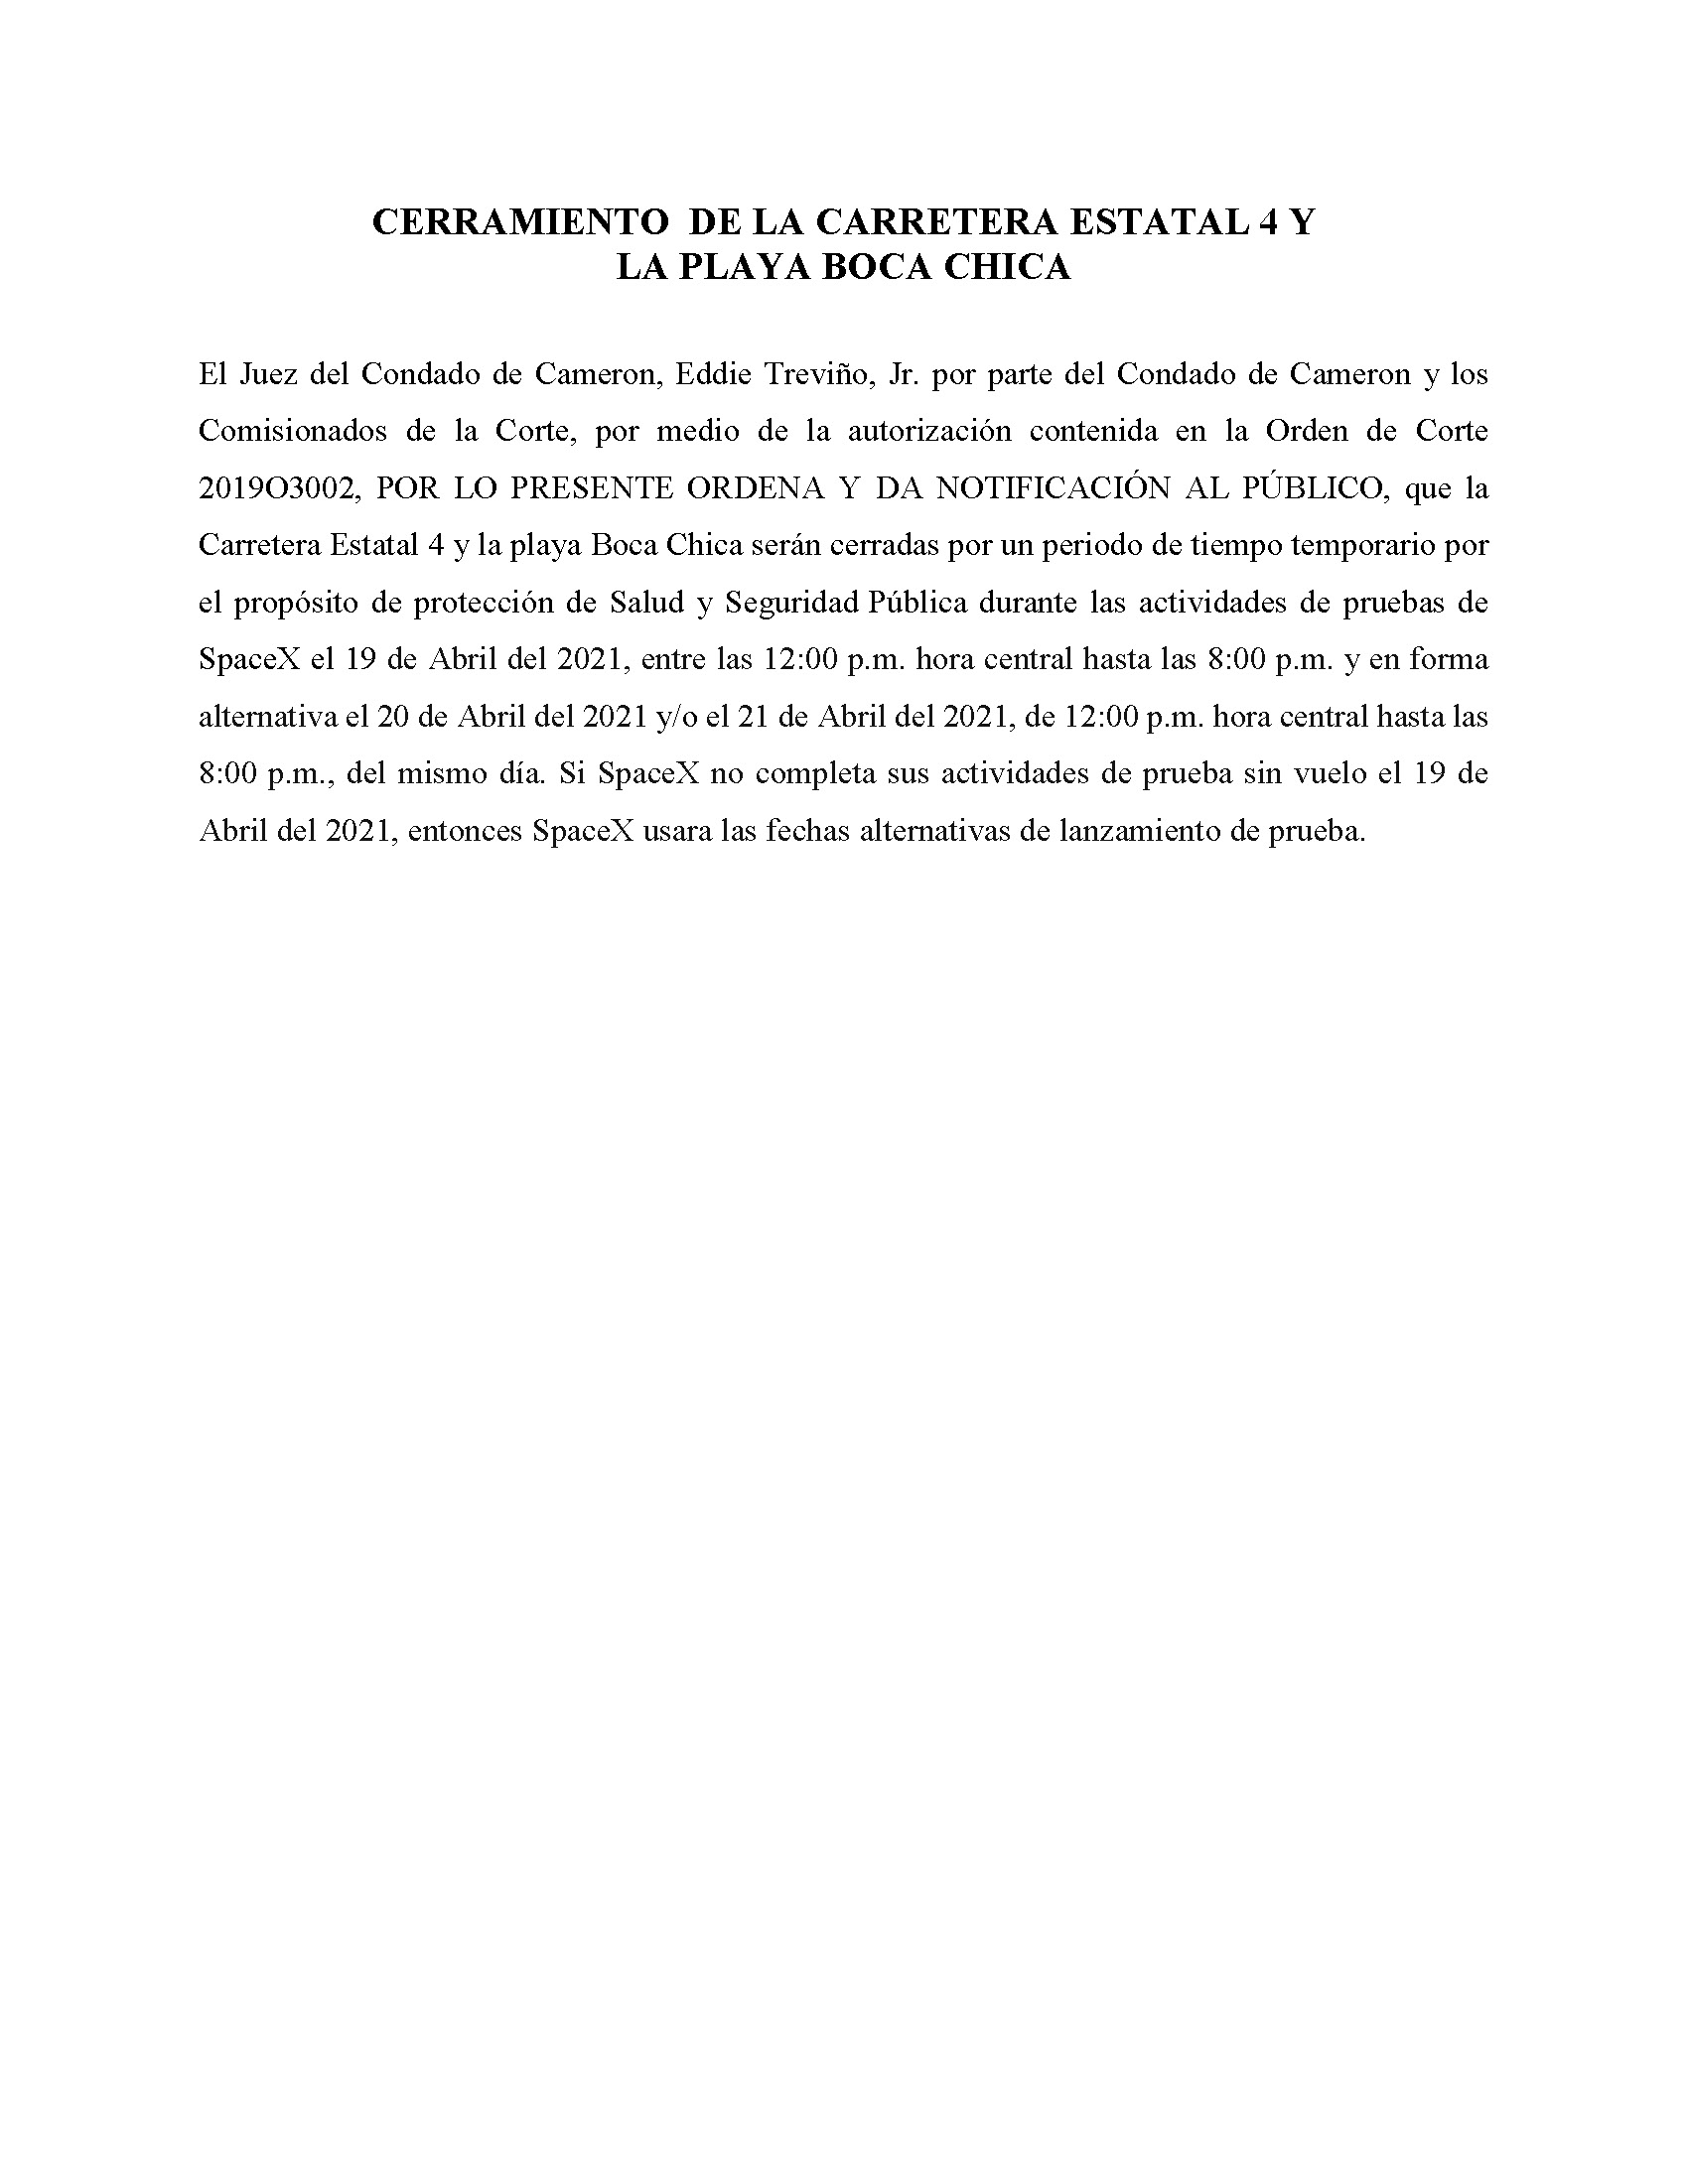 ORDER.CLOSURE OF HIGHWAY 4 Y LA PLAYA BOCA CHICA.SPANISH.04.19.2021